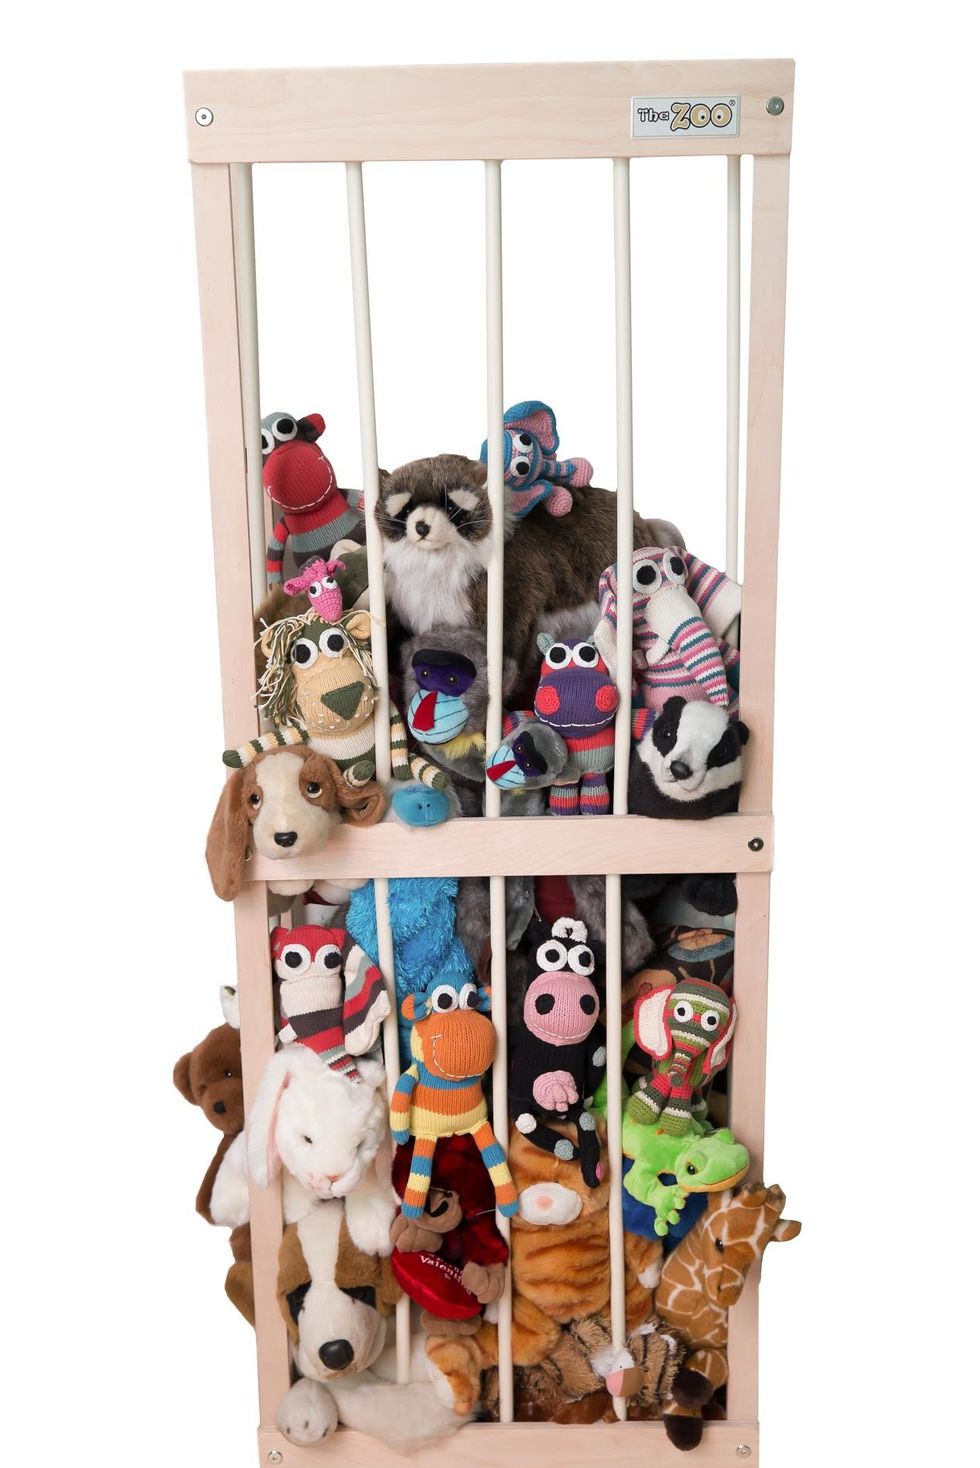 DIY Stuffed Animal Storage: How to Store Stuffed Animals in 3 Easy Steps   Stuffed animal storage, Storing stuffed animals, Stuffed animal displays